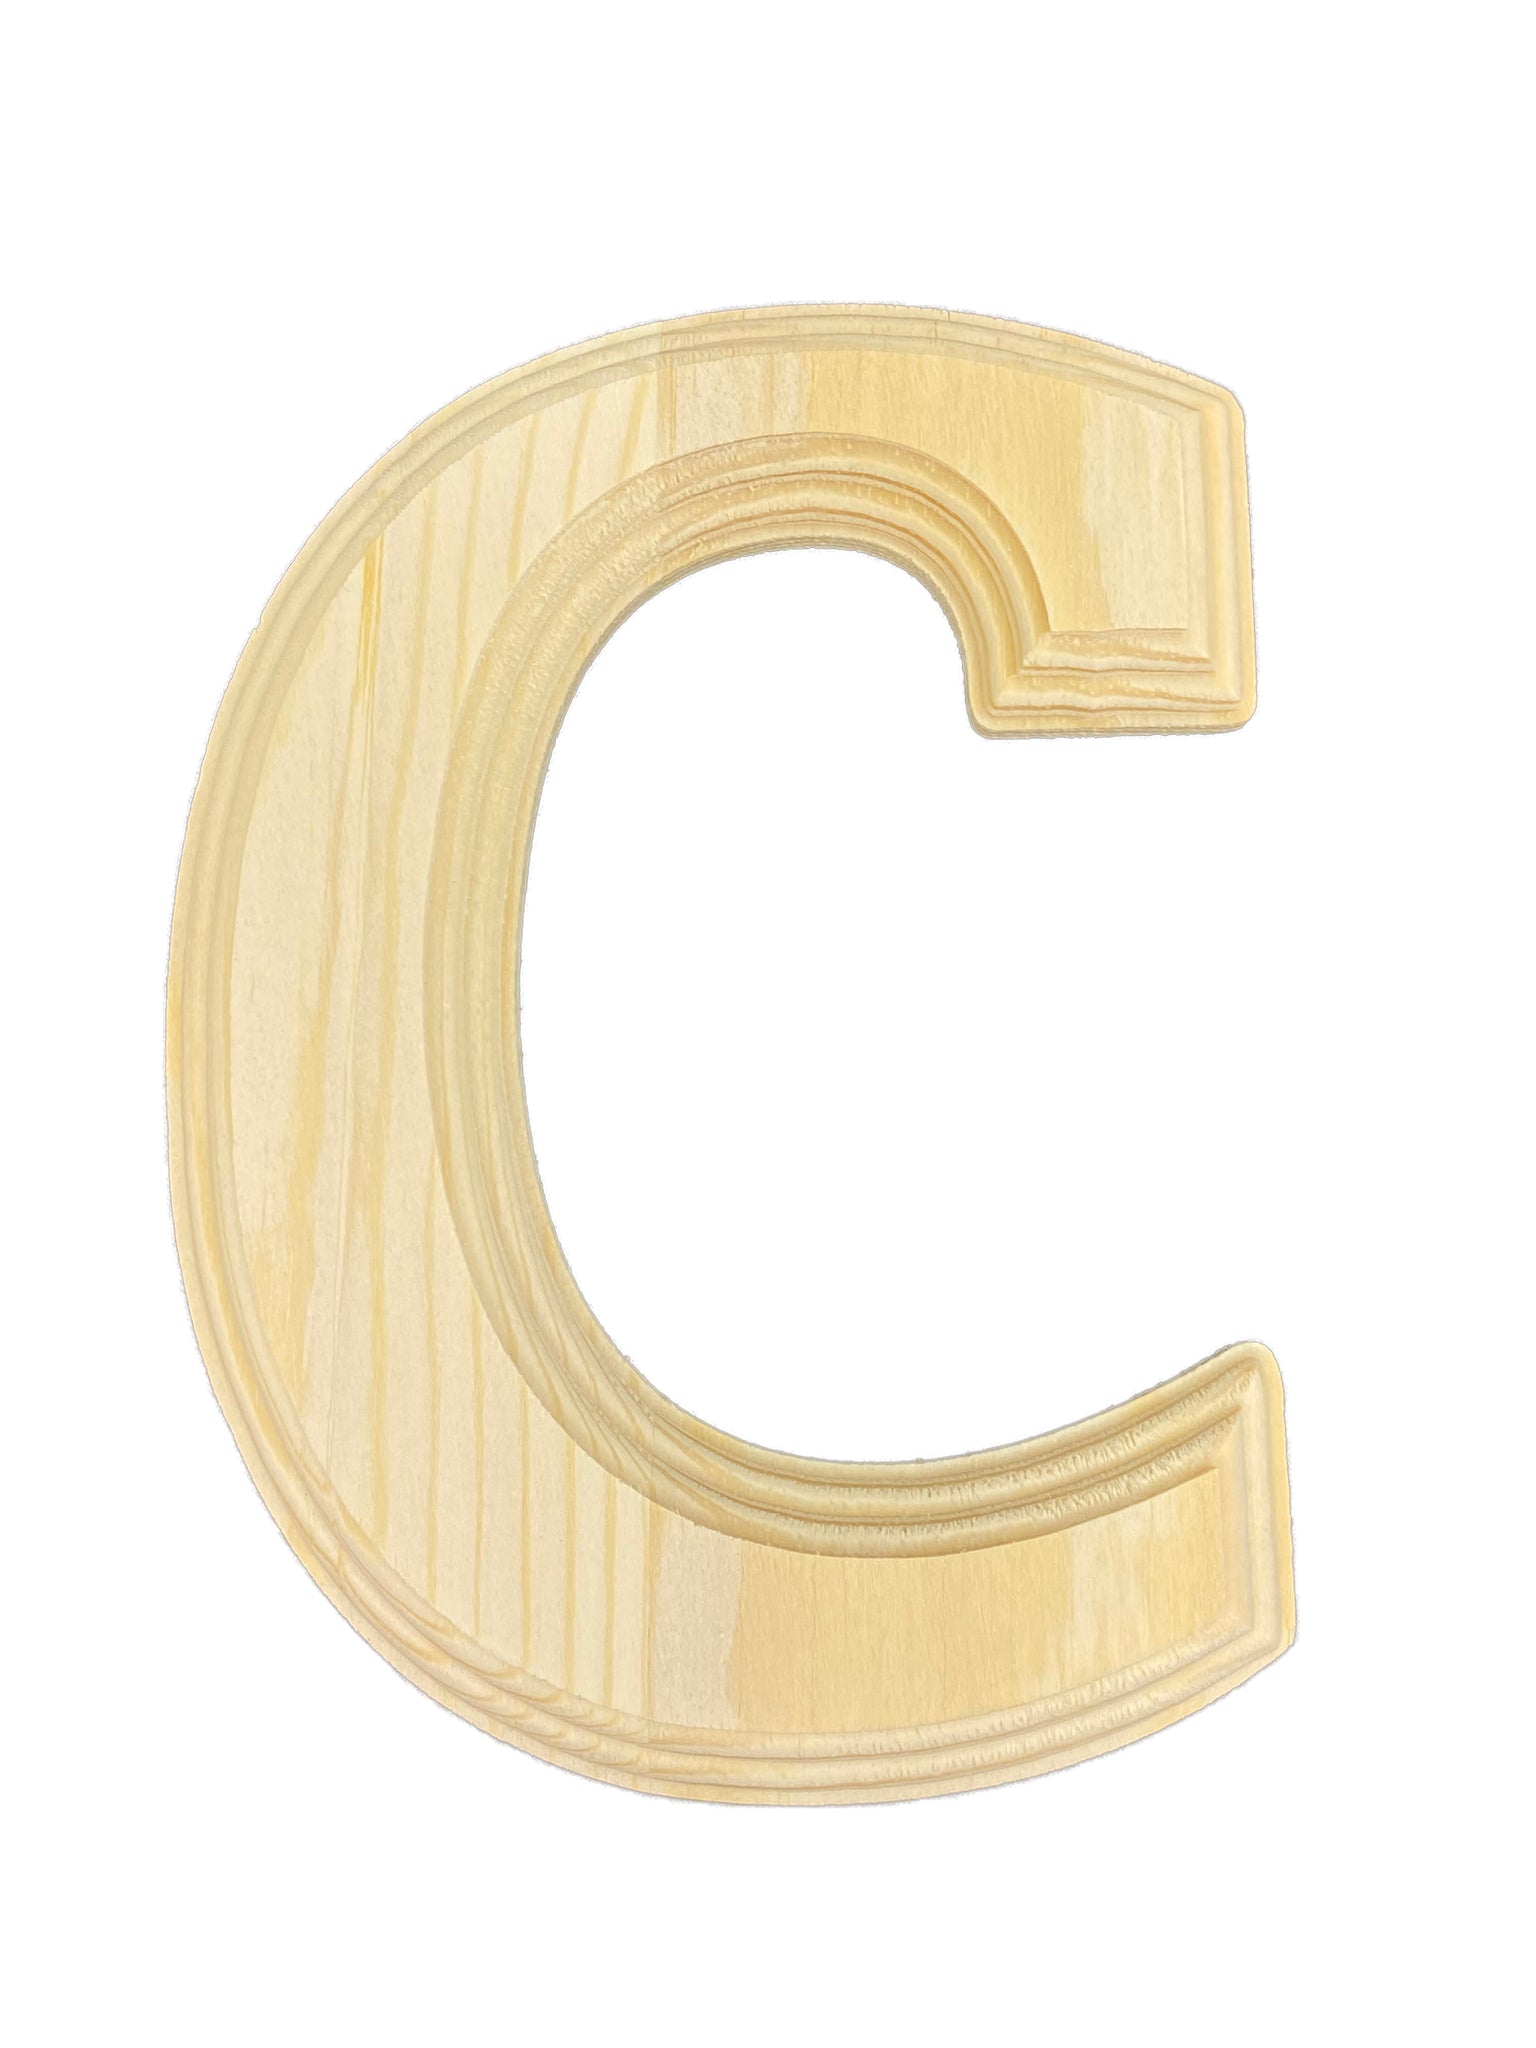  JoePaul's Crafts Western Wooden Letters - 6 - B